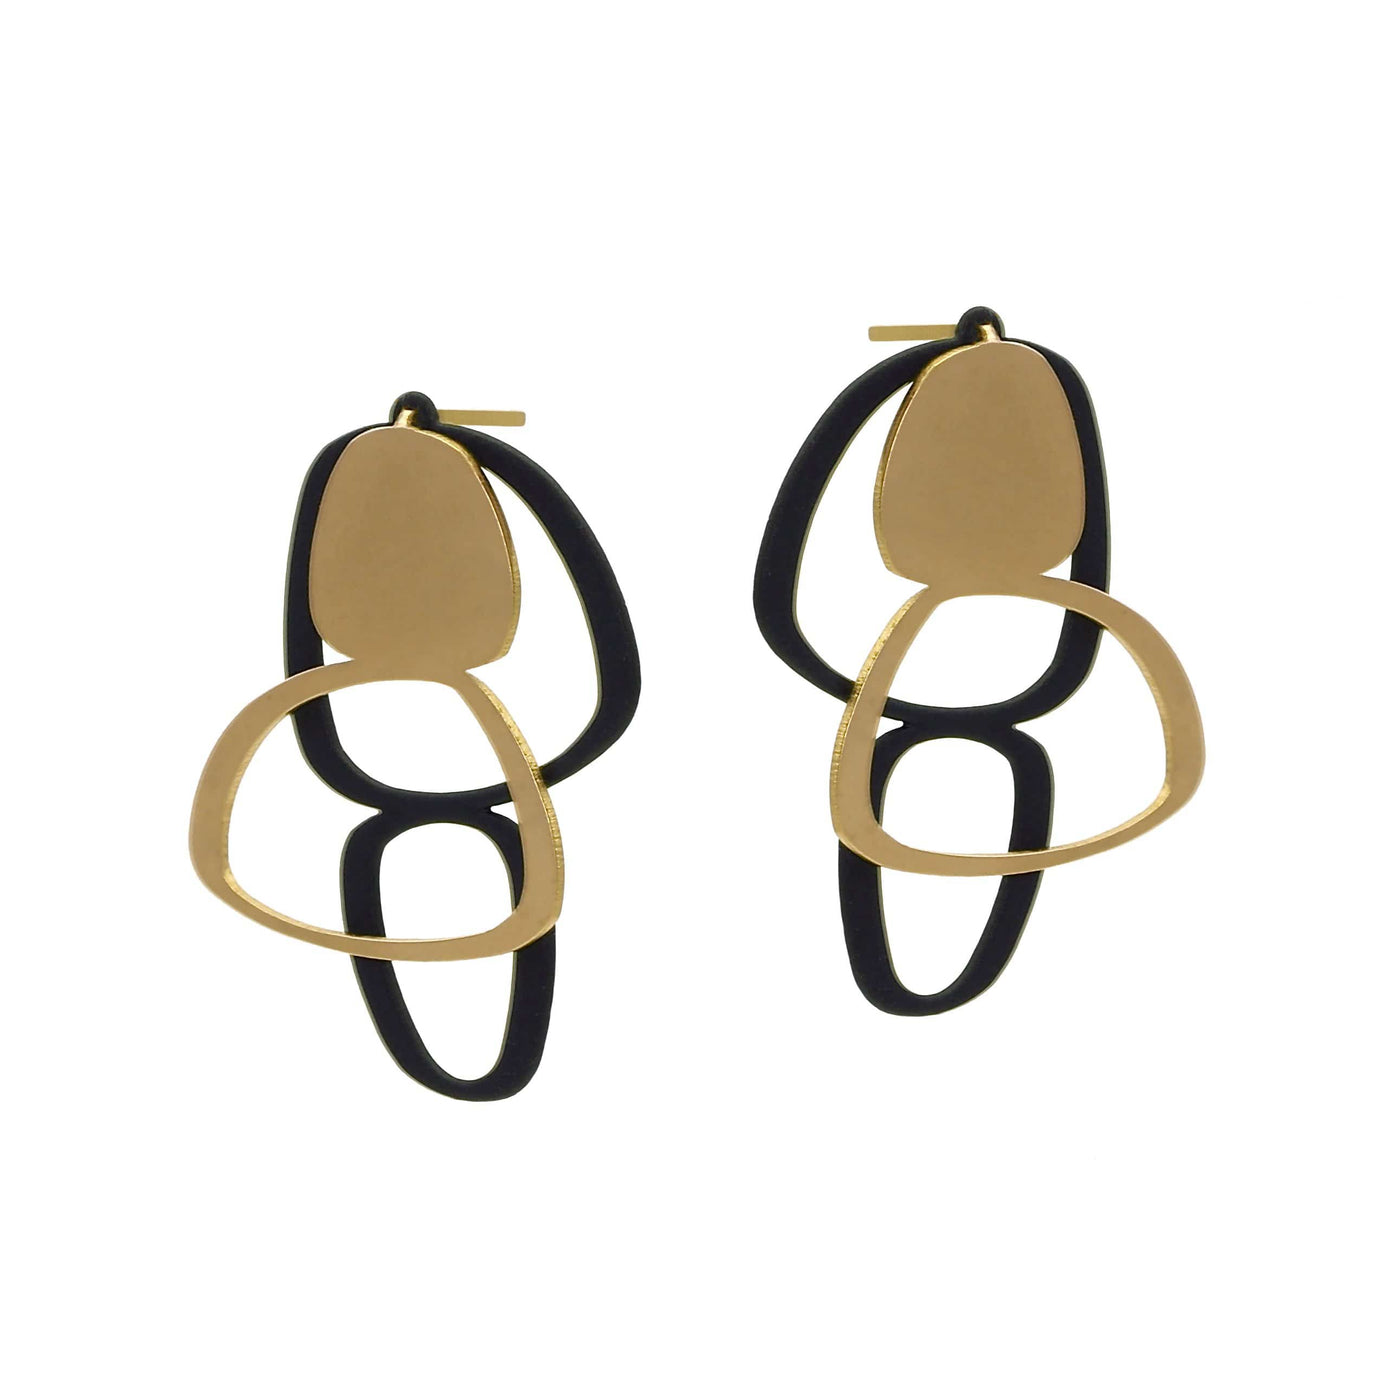 X2 Boulder Stud Earrings - Gold/ Raw - inSync design